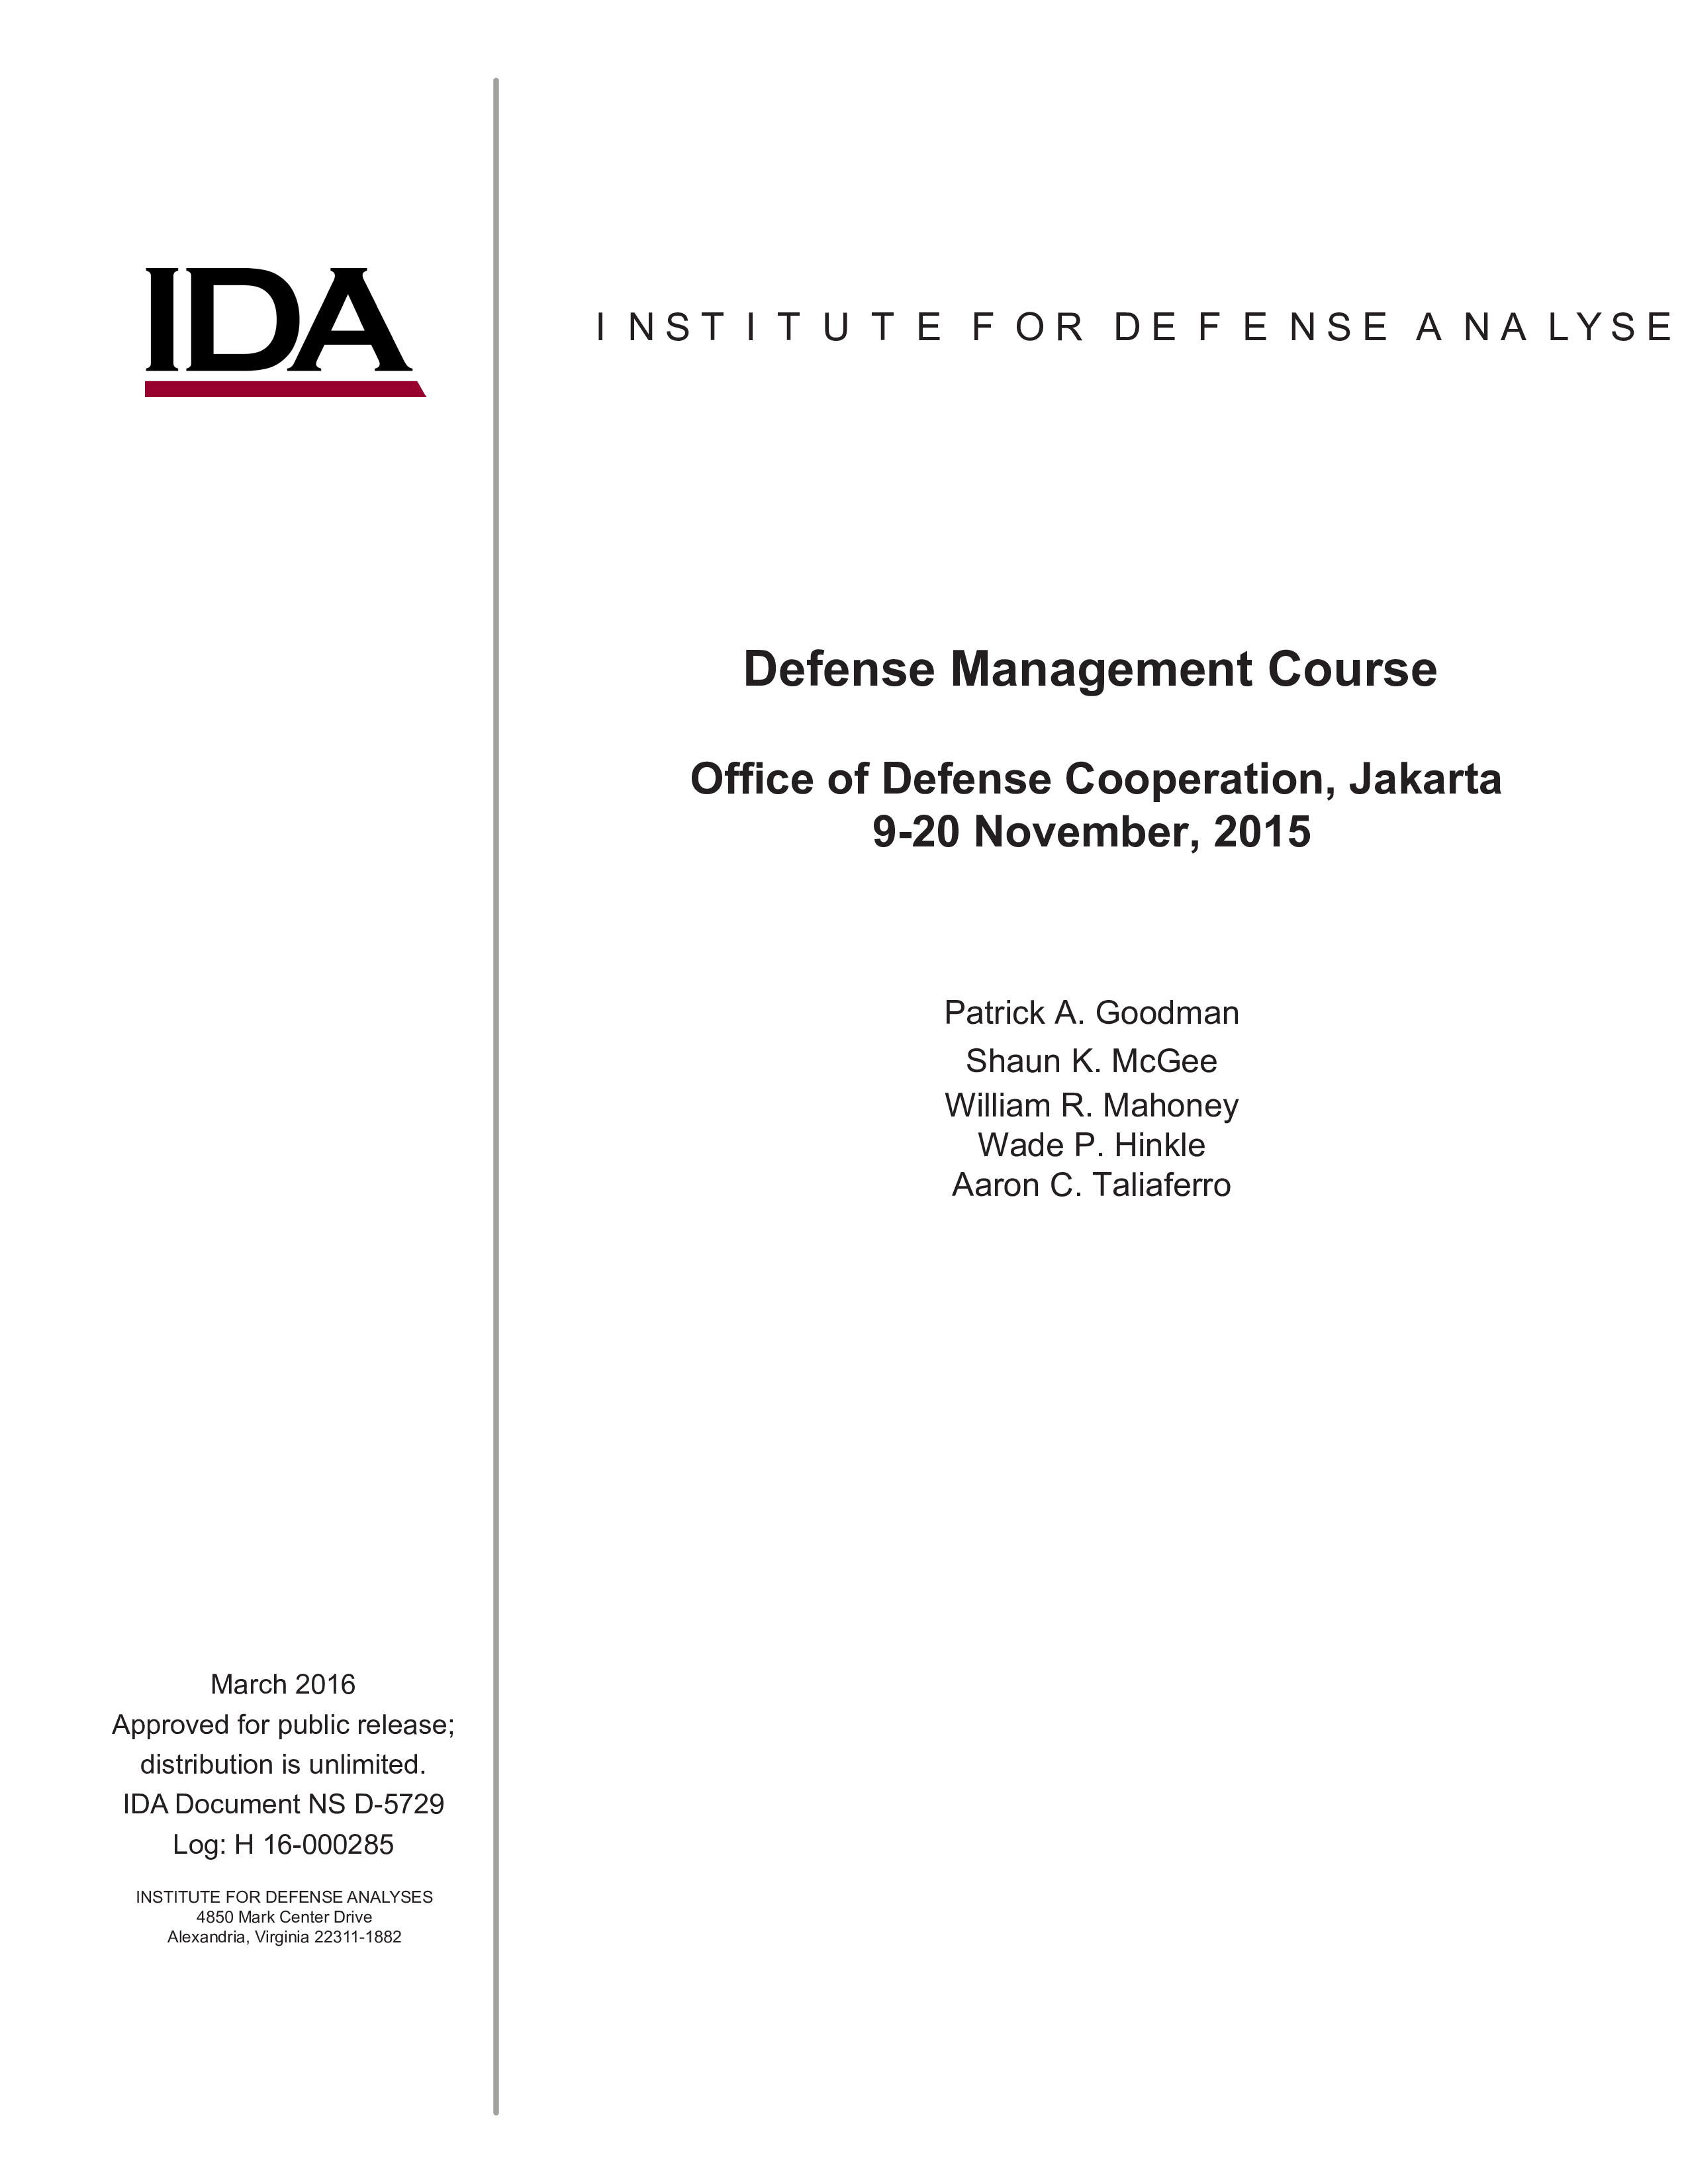 Defense Management Course, Office of Defense Cooperation, Jakarta, 9-20 November, 2015